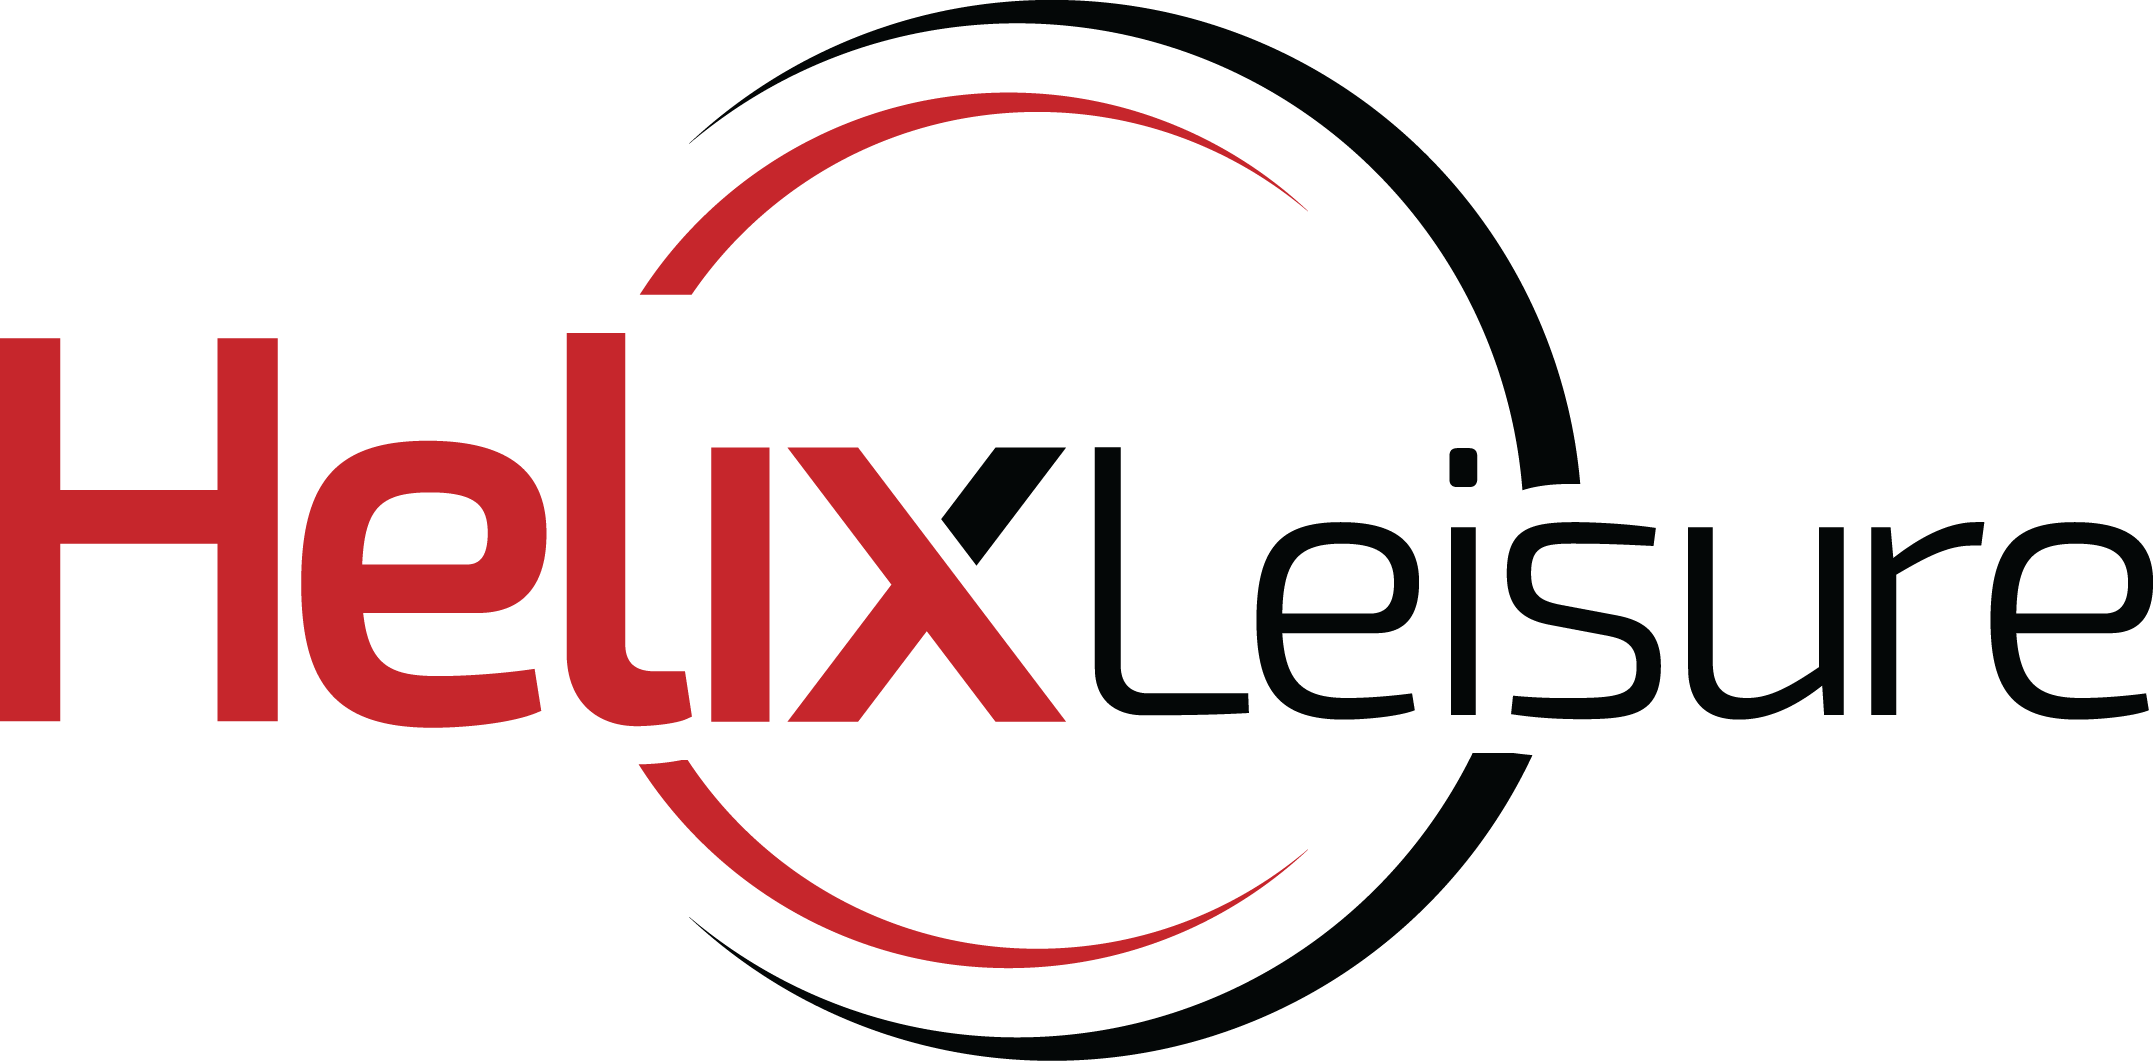 The Locker Network is a Helix Leisure Company